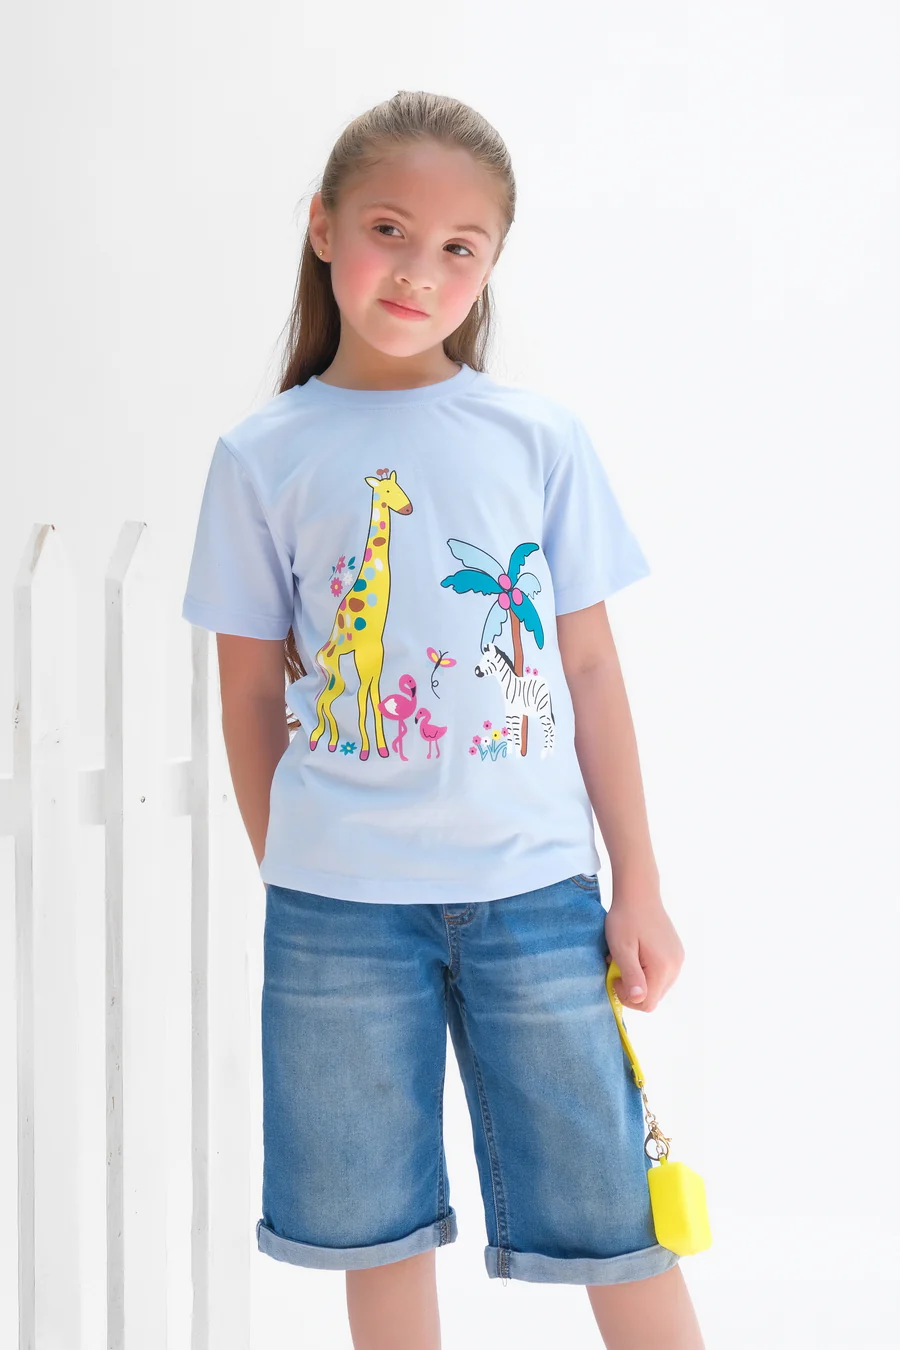 Safari Animals Half Sleeves T-Shirts For Kids - Sky Blue